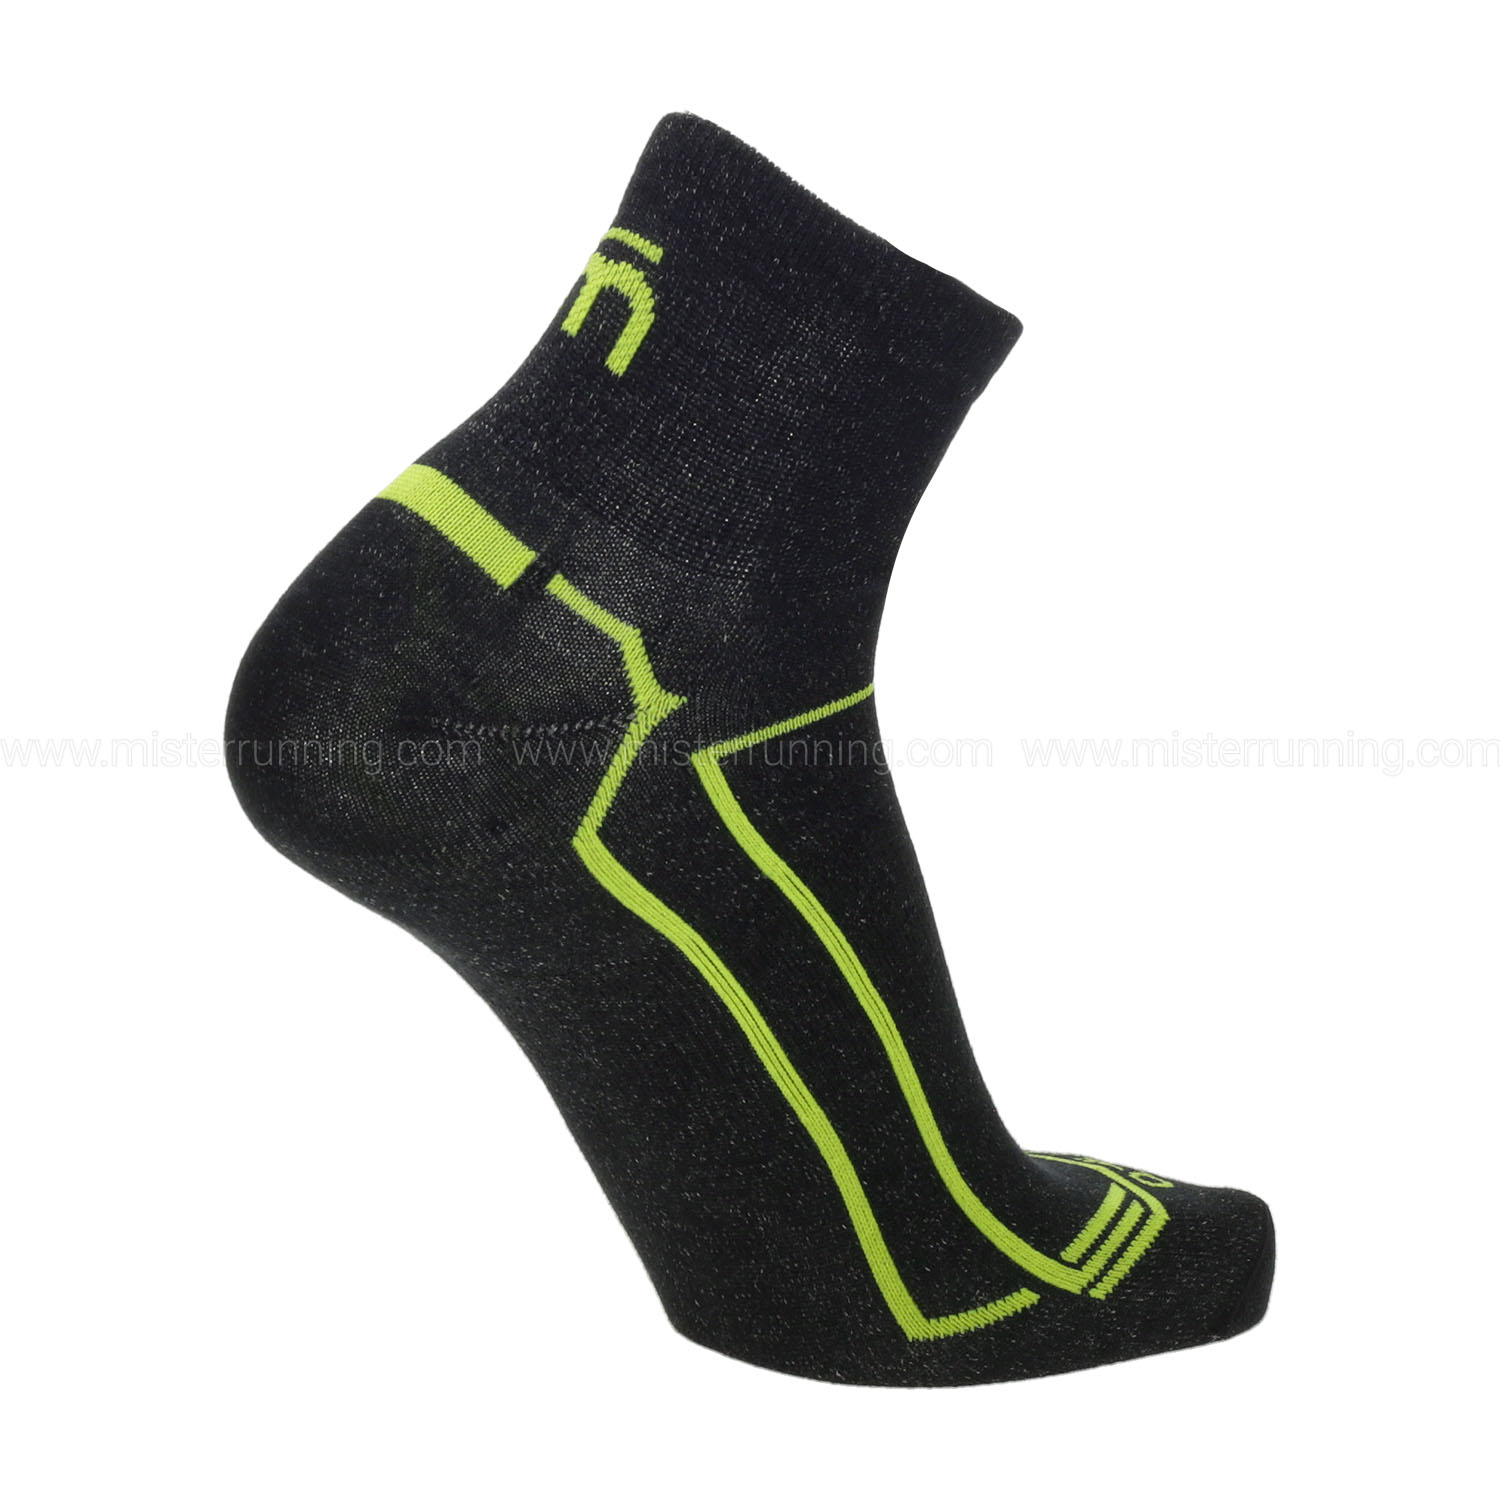 Mico Odor Zero Outlast Light Weight Socks - Nero/Giallo Fluo